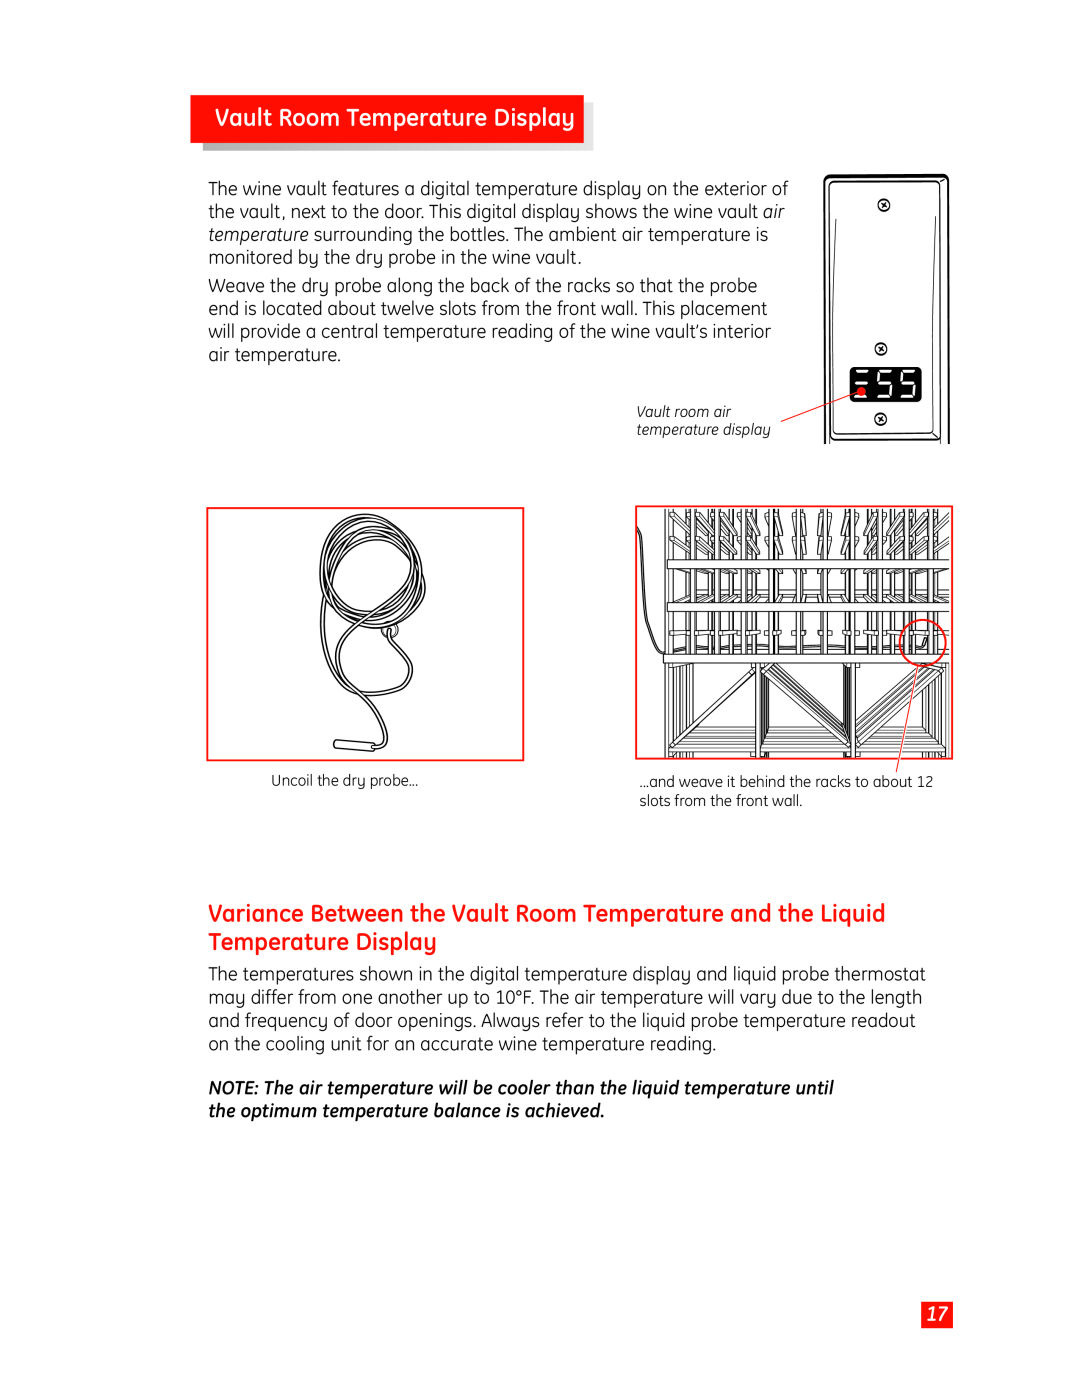 GE Monogram Wine Vault owner manual Vault Room Temperature Display, Vault room air temperature display 